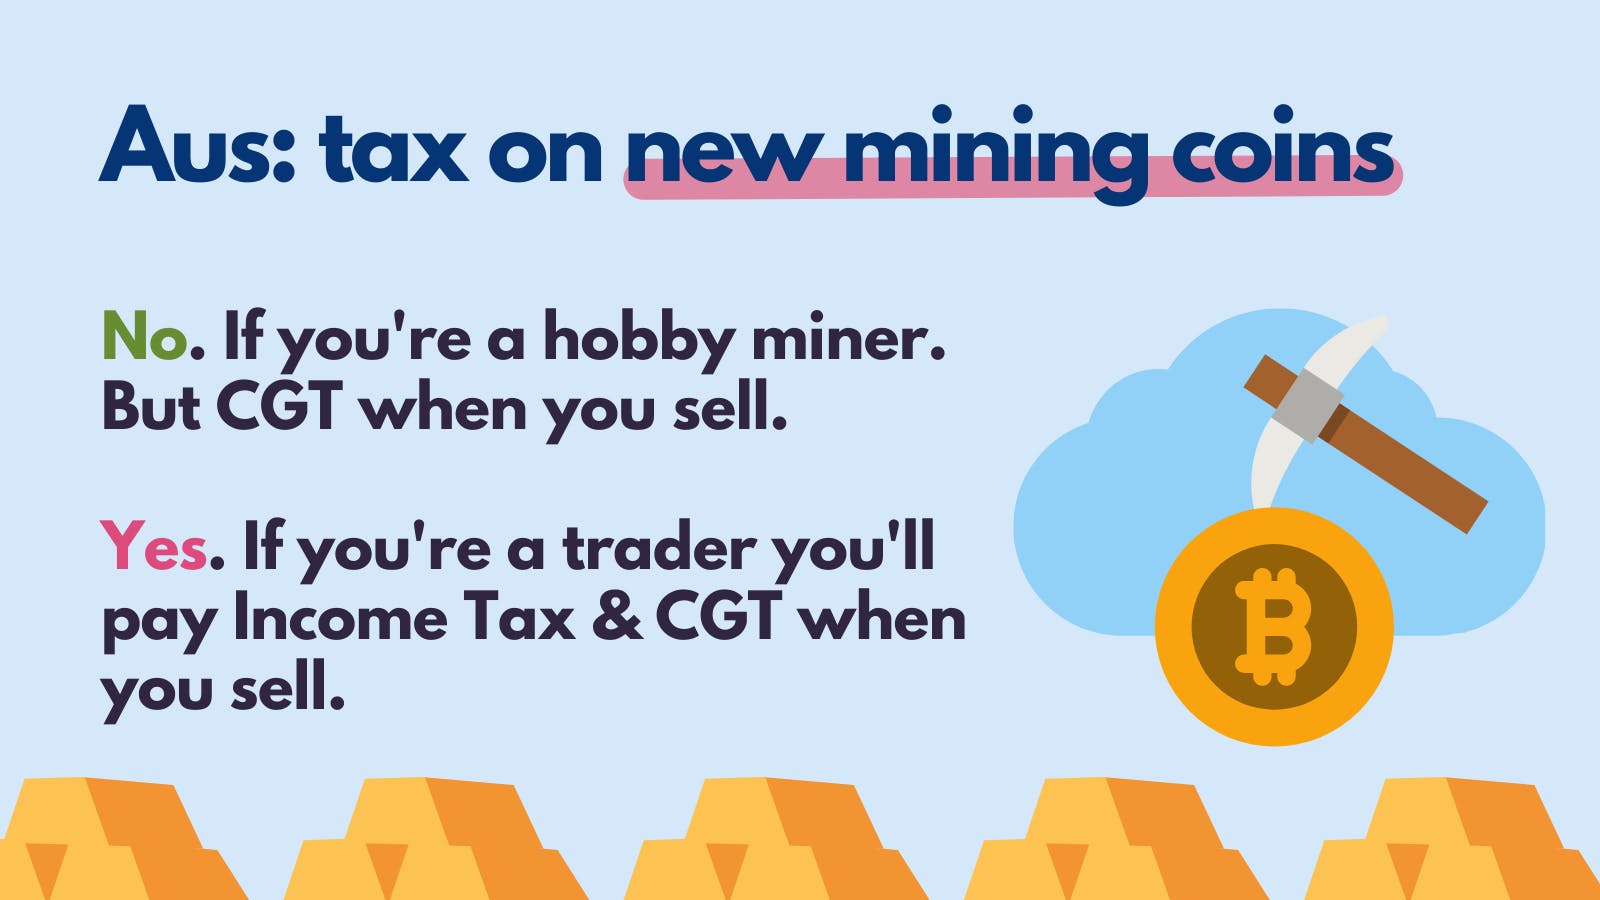 how to do taxes for crypto mining